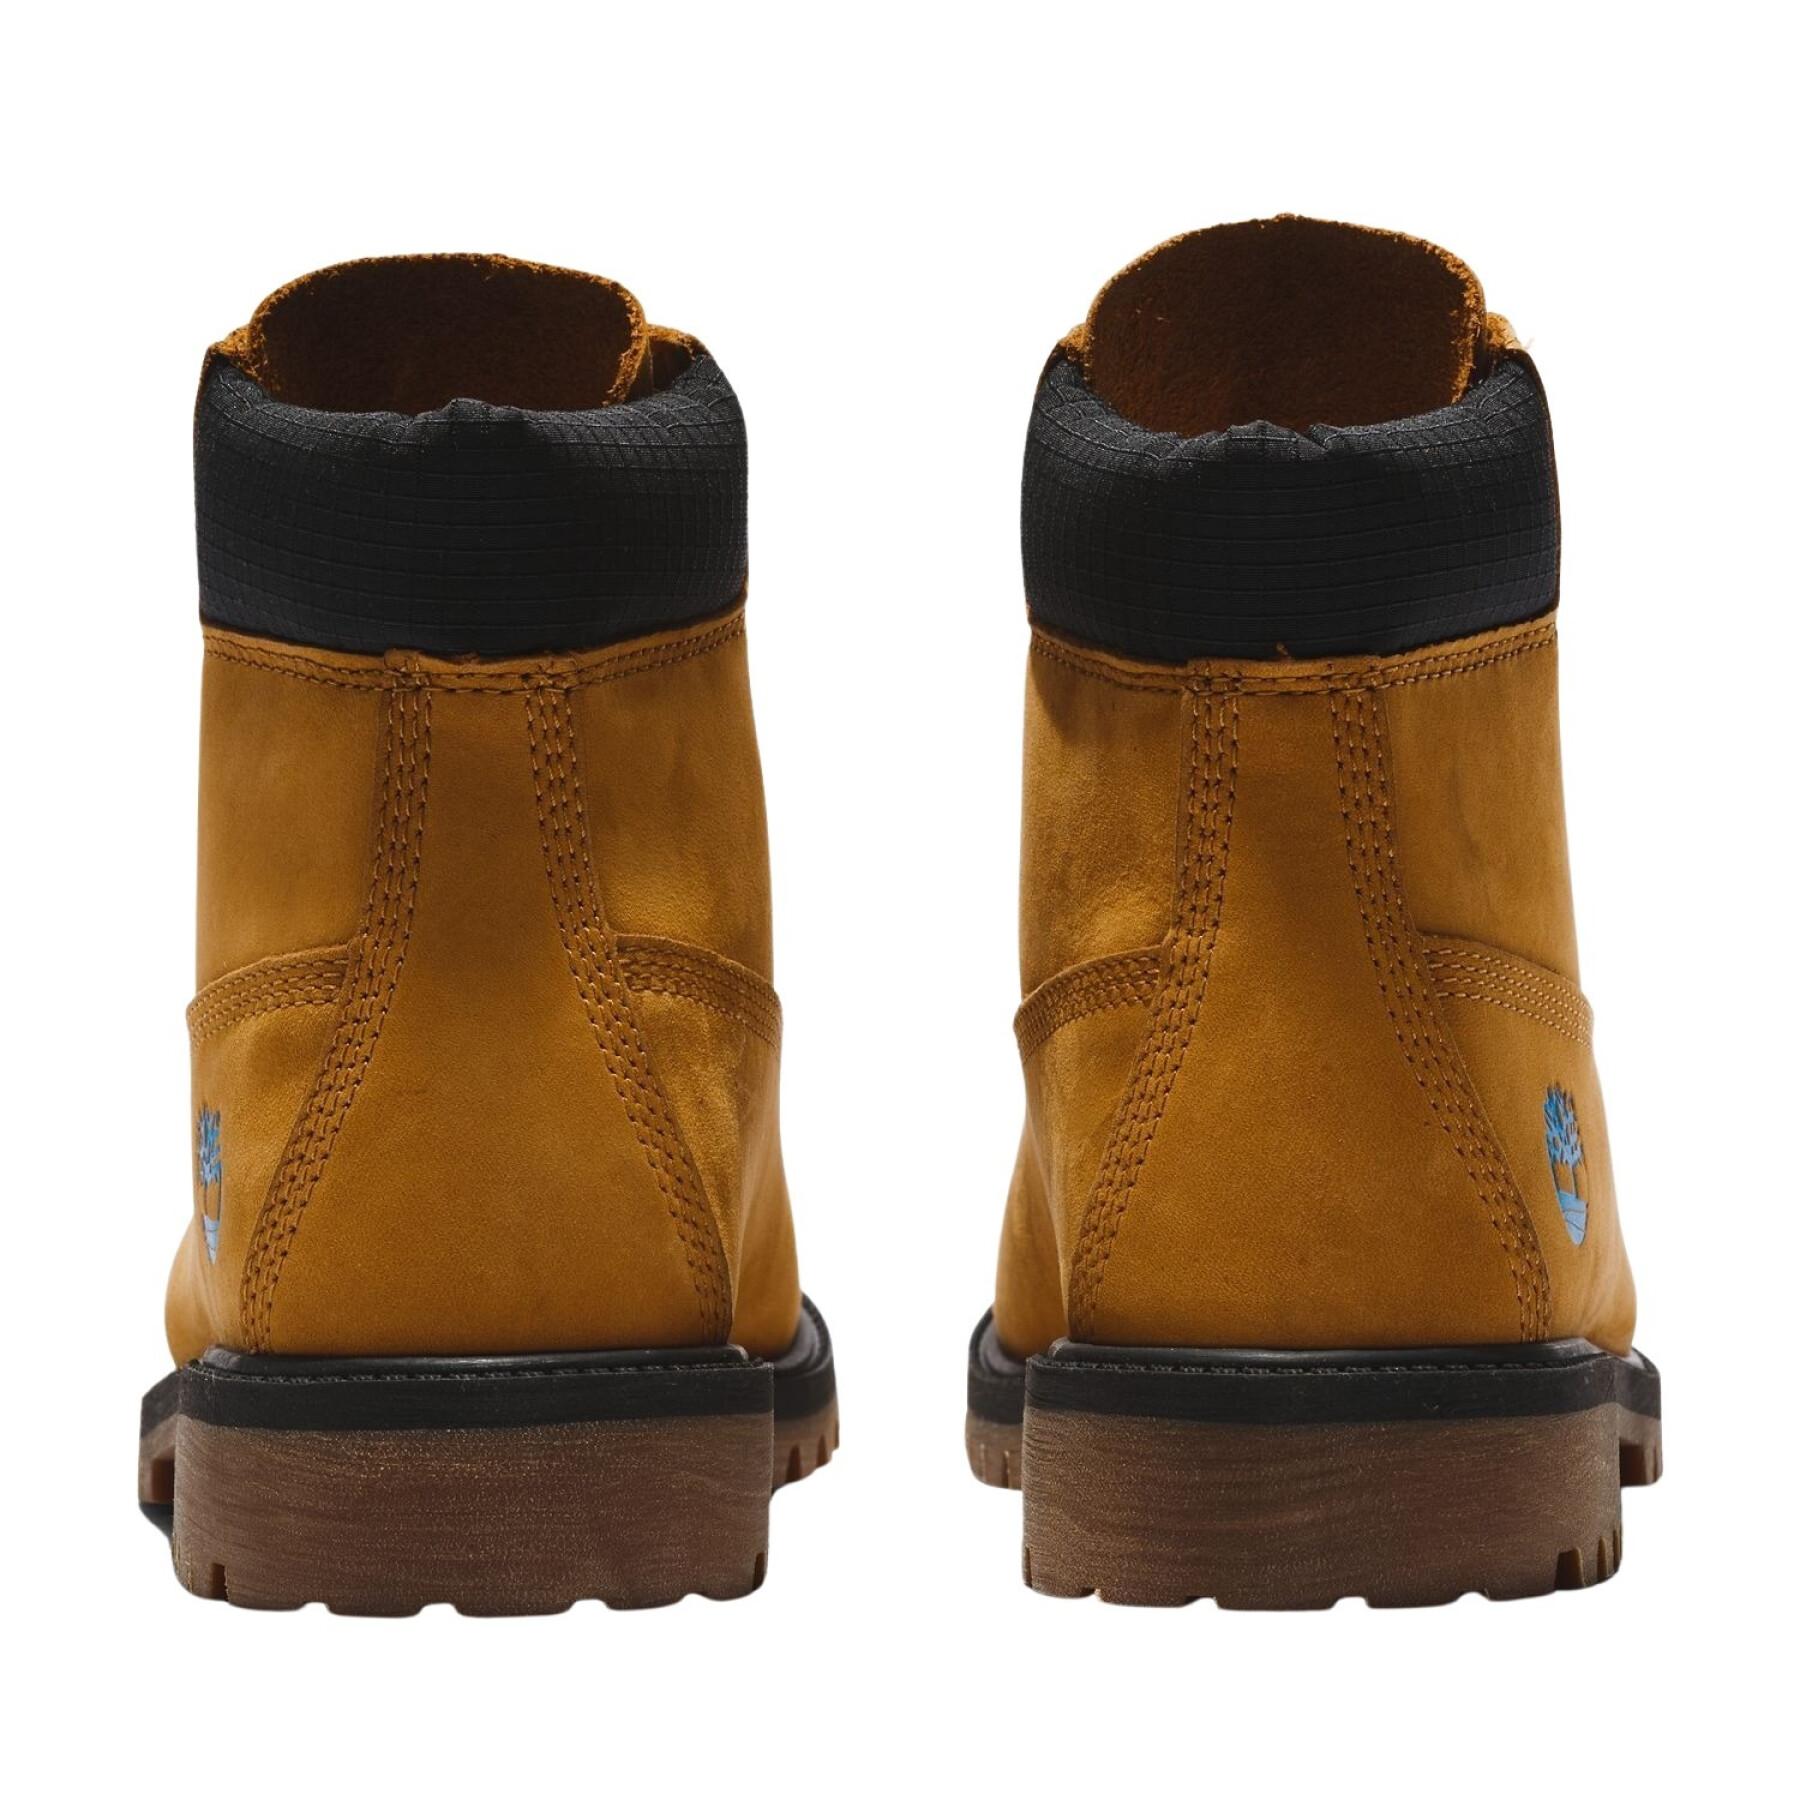 Buty dla dzieci Timberland Premium 6 Inch